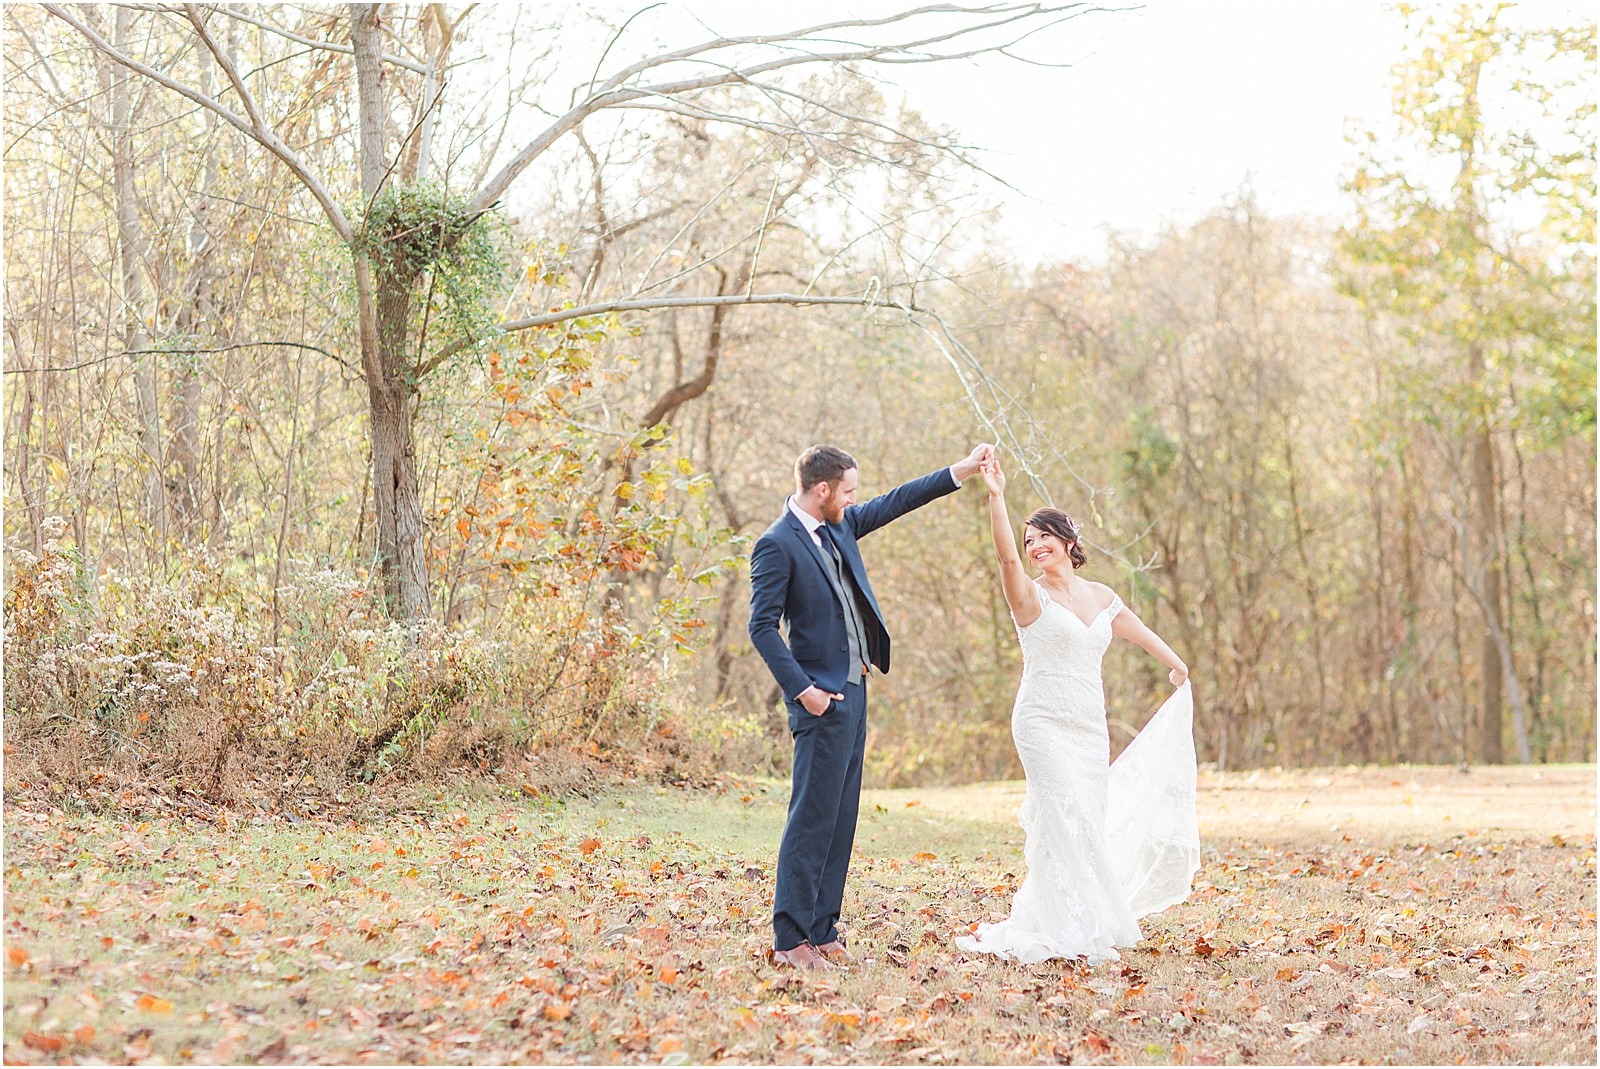 Walker and Alyssa's intimate fall wedding in Southern Indiana. | Wedding Photography | The Corner House Wedding | Southern Indiana Wedding | #fallwedding #intimatewedding | 044.jpg